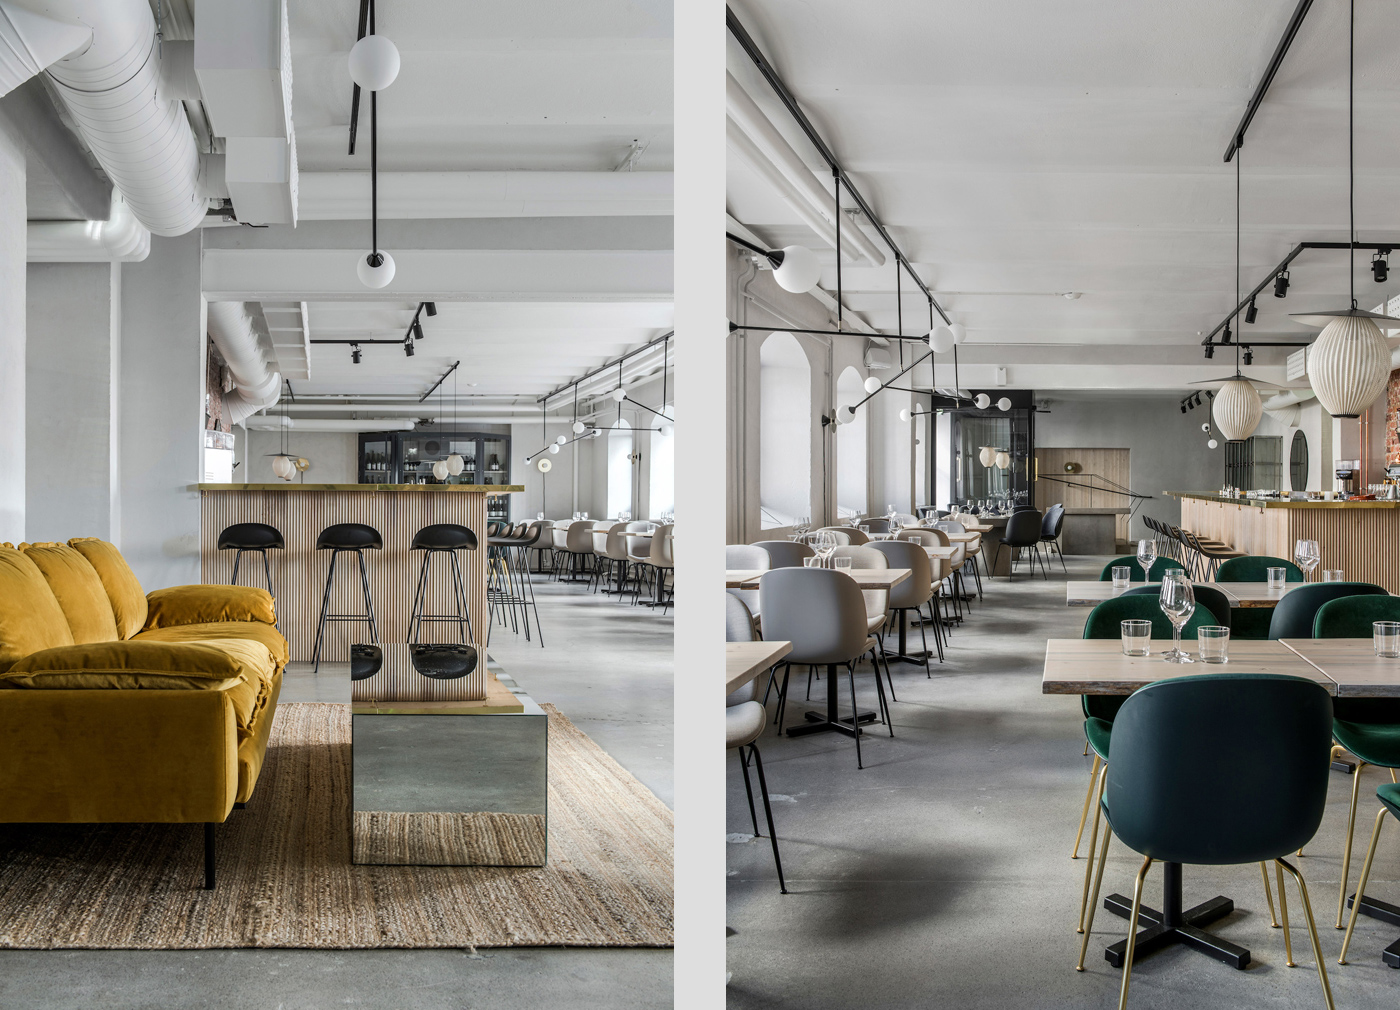 Muted tones set the scene inside Helsinki's Maannos restaurant